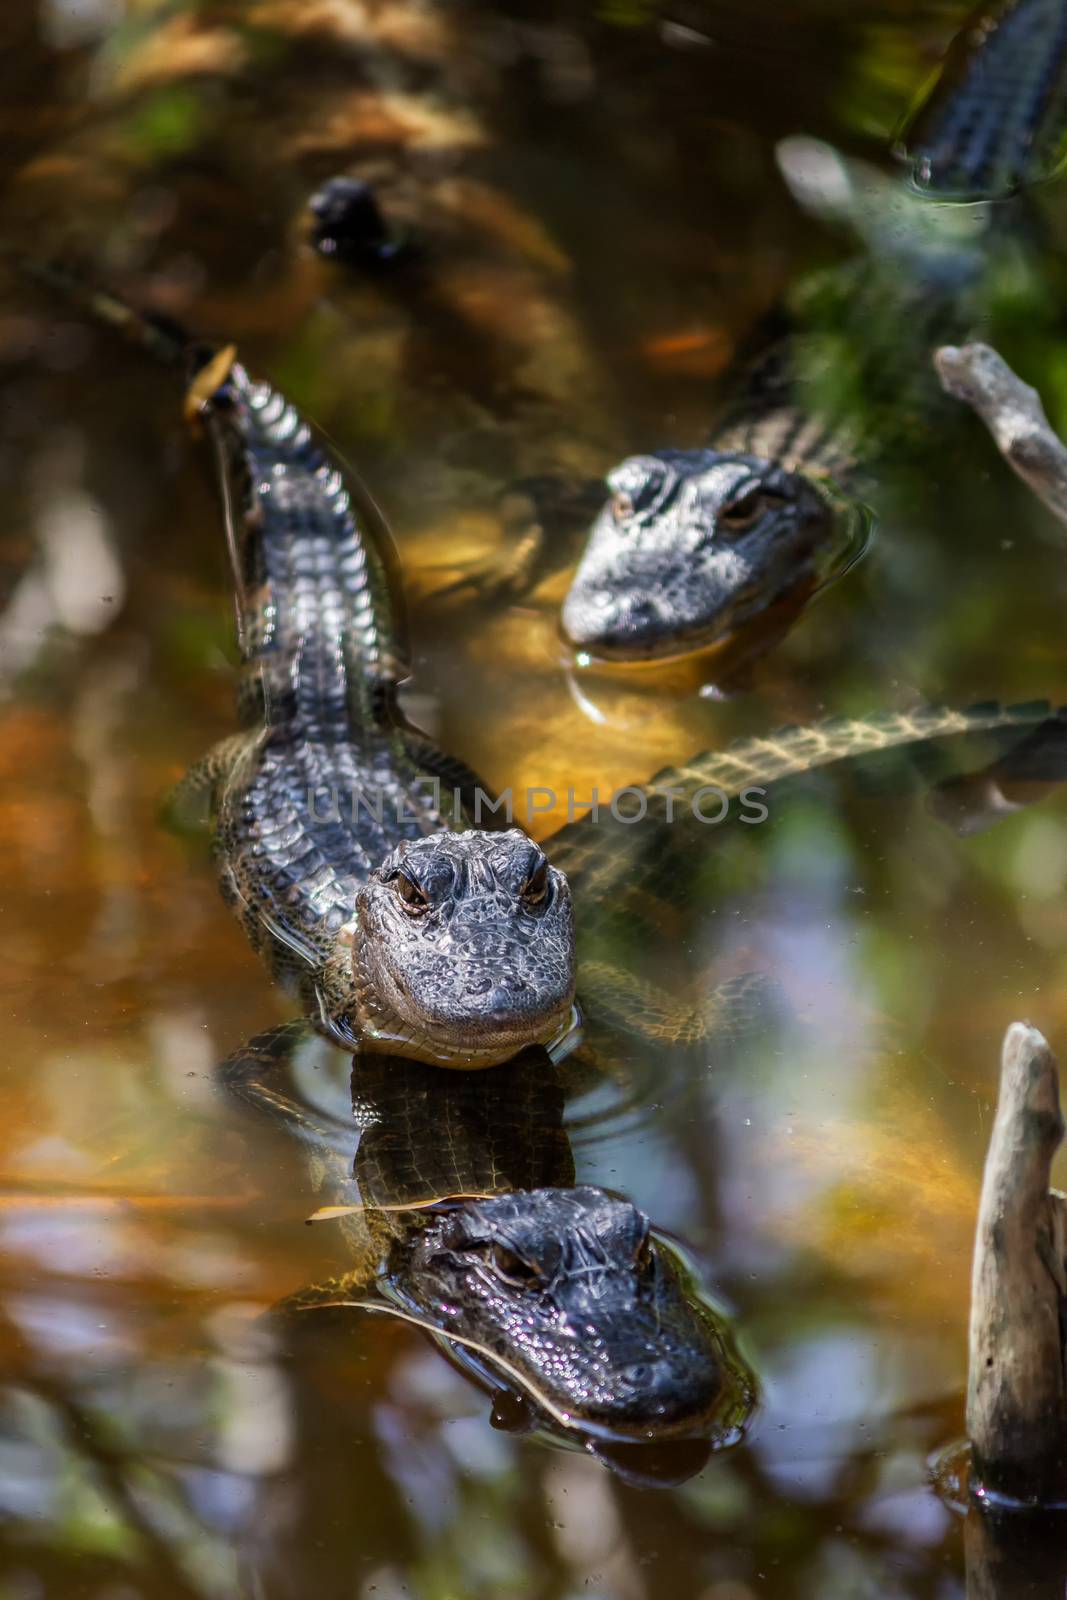 Wild Aligators in a Florida Mangrove Swamp, USA